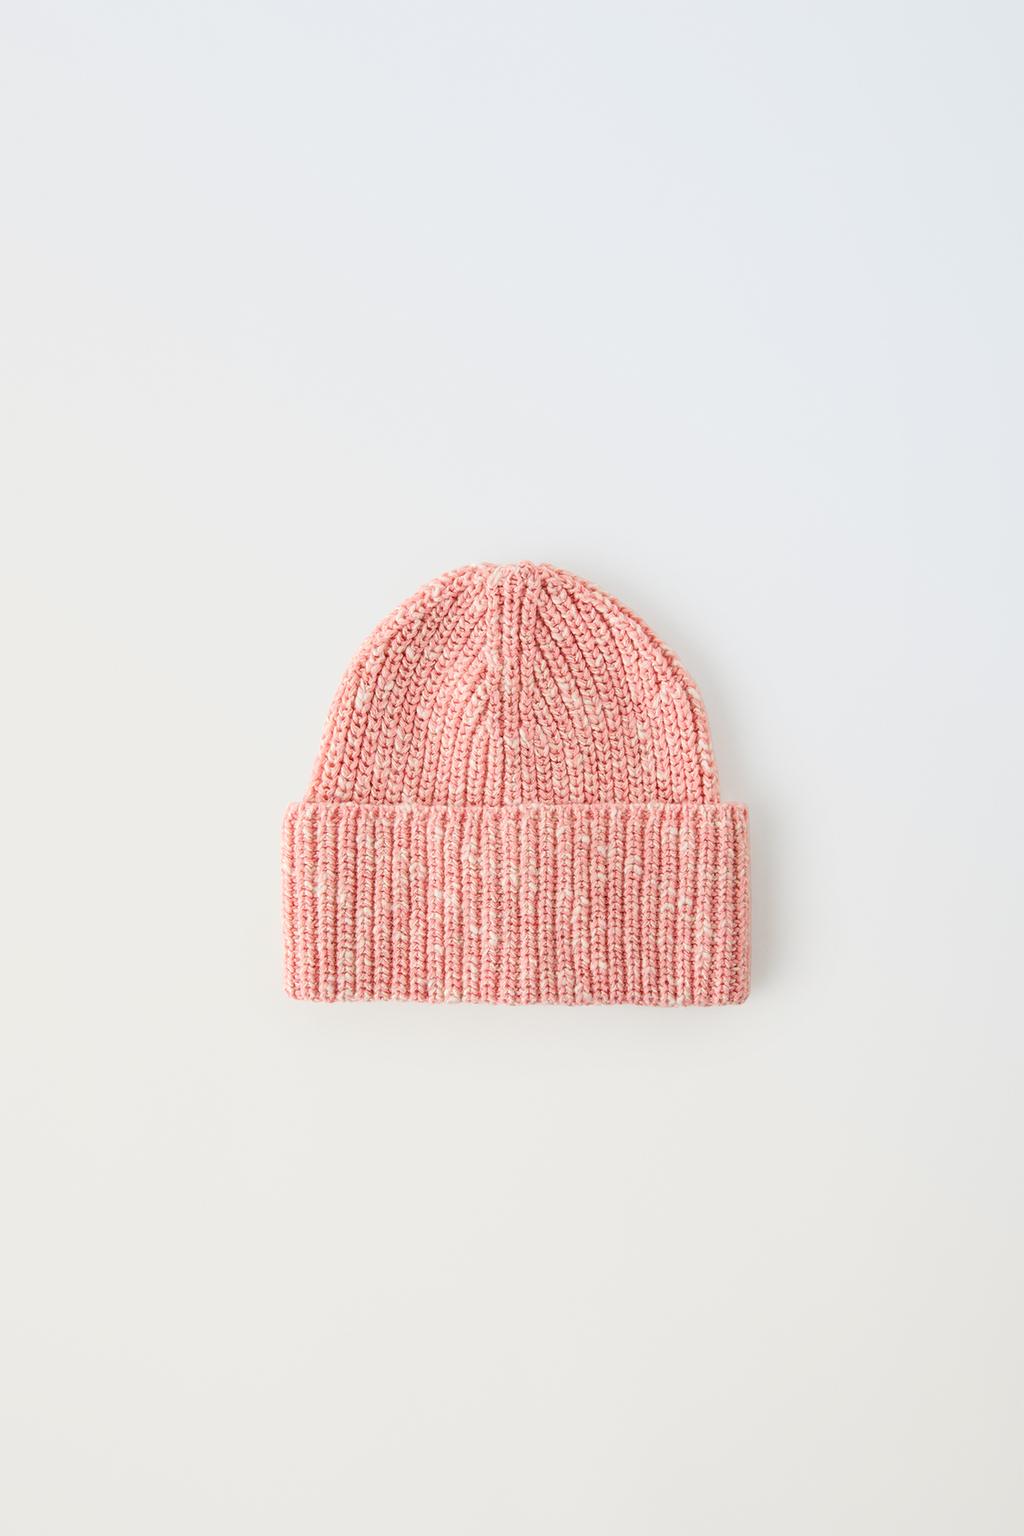 Вязанная шапка ZARA, розовый вязанная шапка zara светлая фуксия